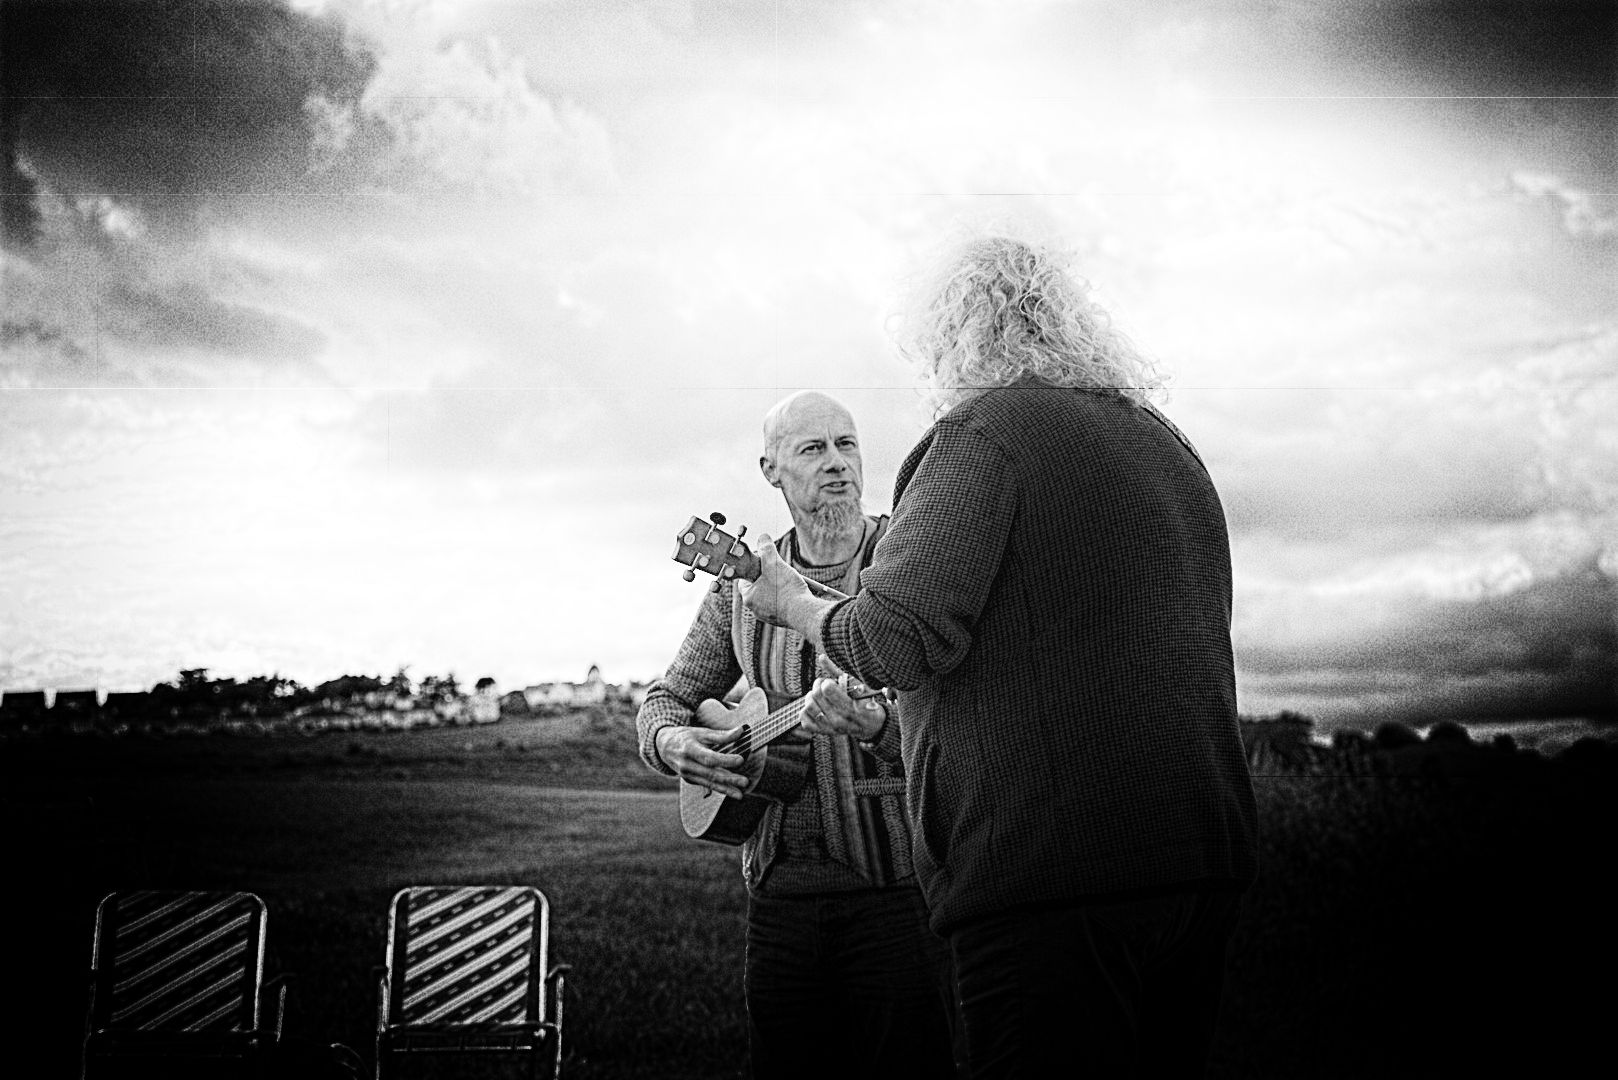 Paul Scott &amp; Friends performing at Broadsands, Summer 2021. Image copyright Dave Collerton - Pinhole Camera Emulation using NIK Silver Efex